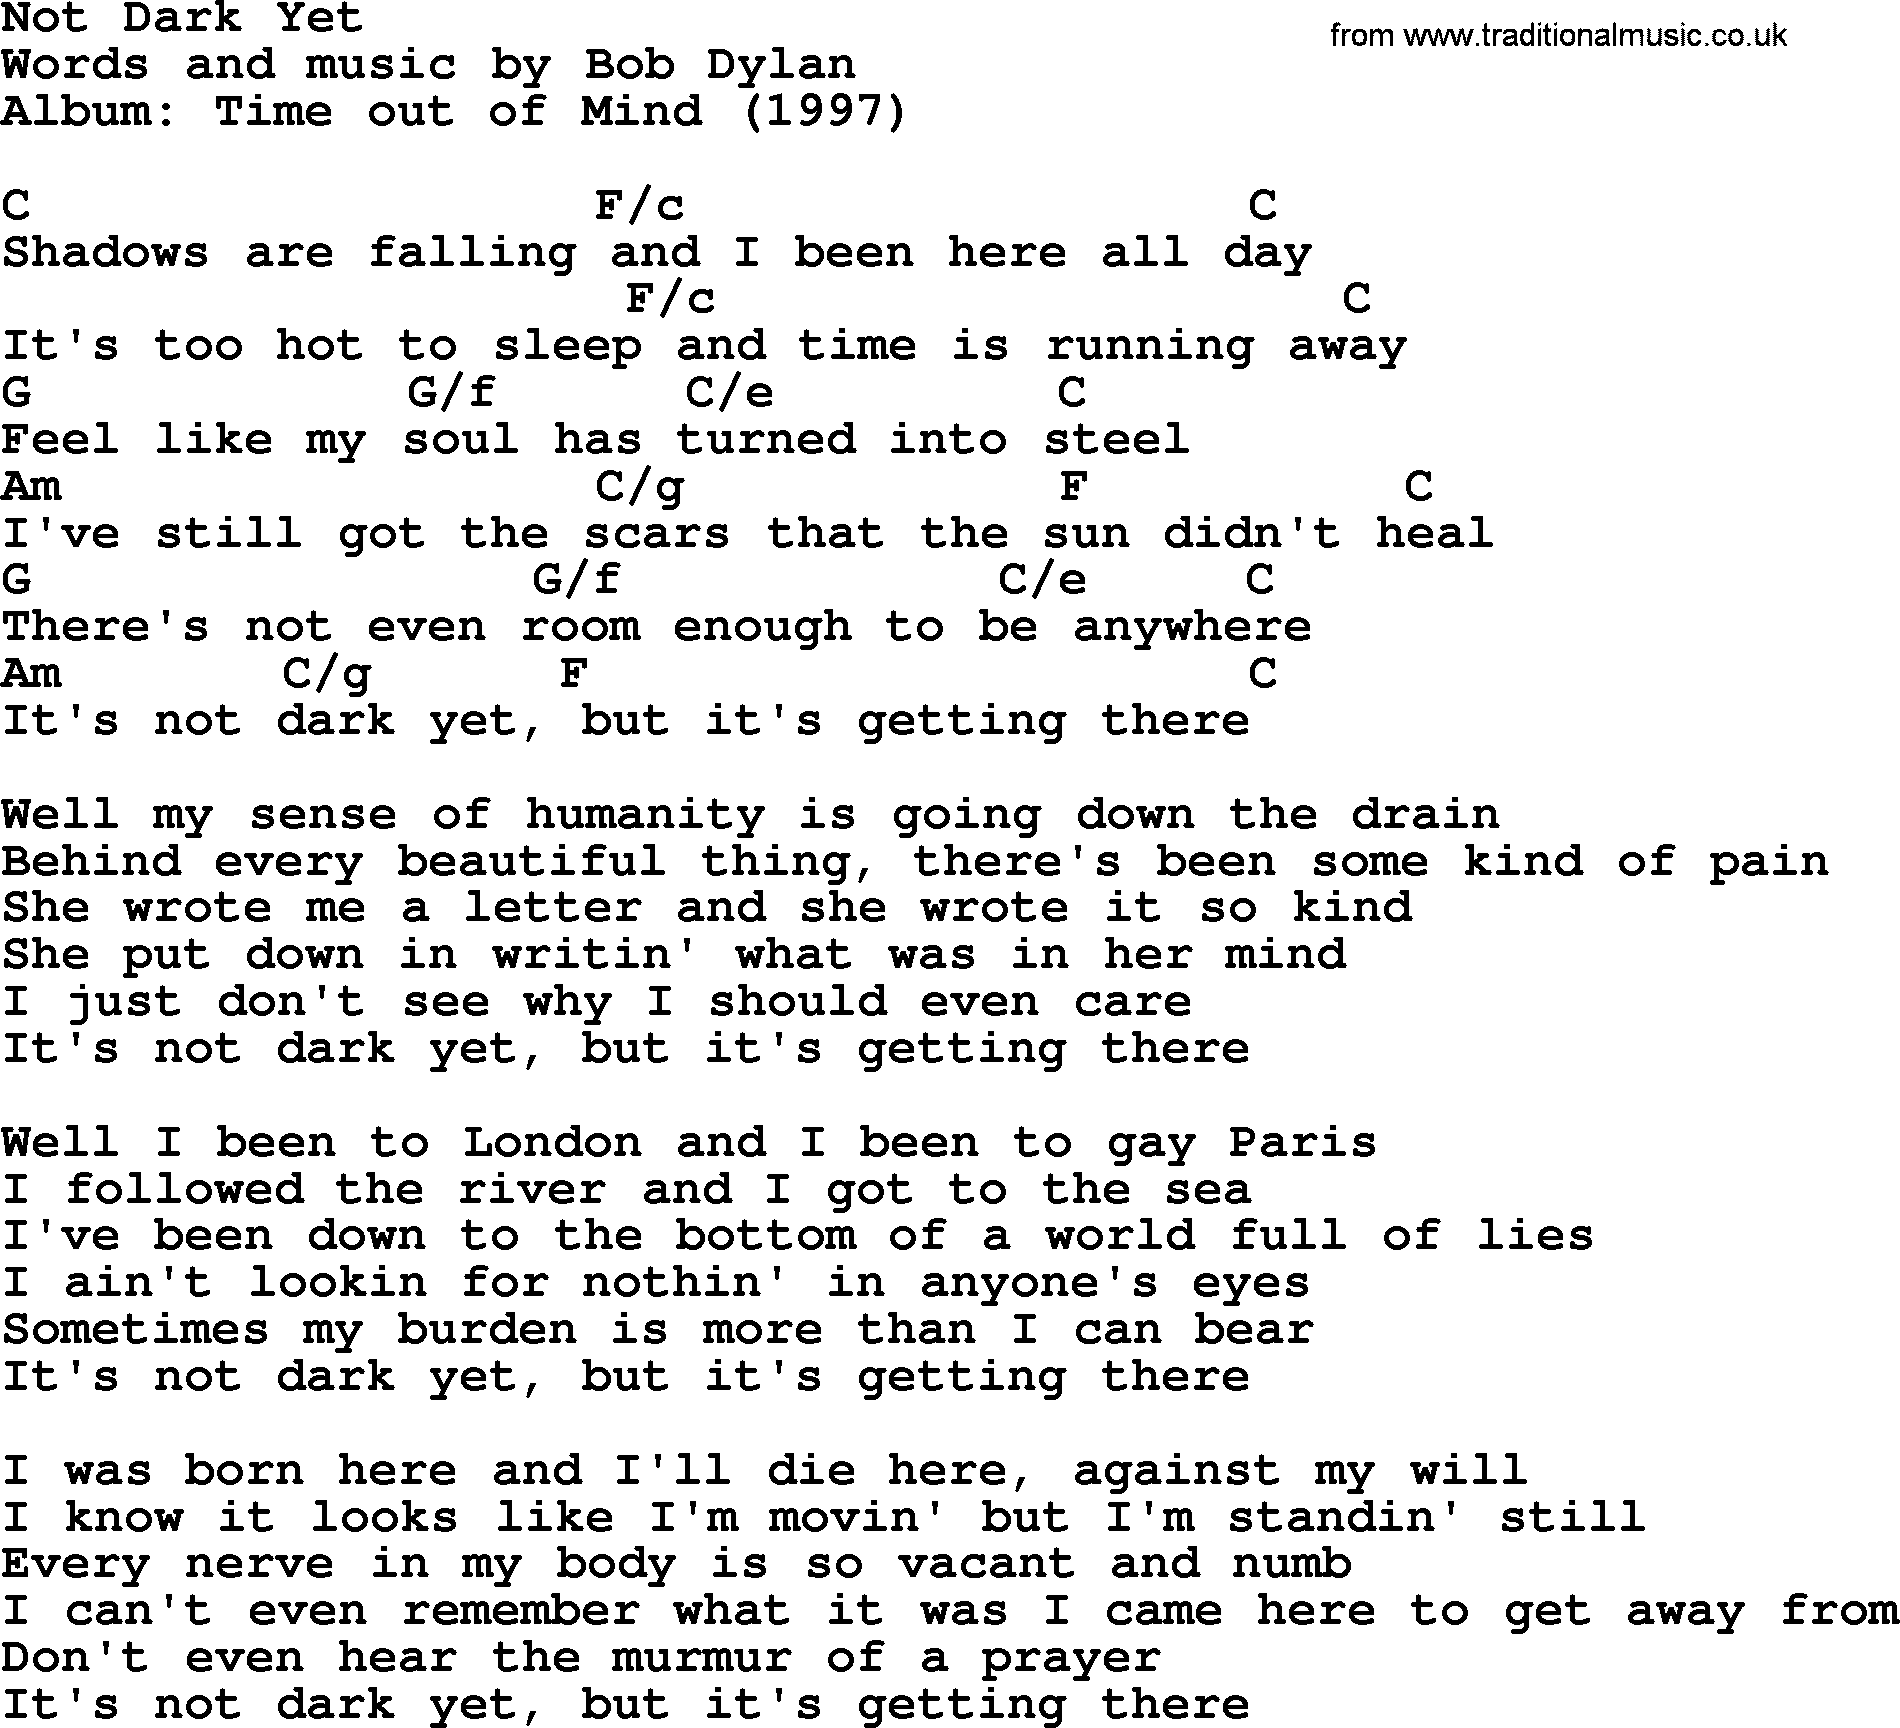 Bob Dylan song, lyrics with chords - Not Dark Yet